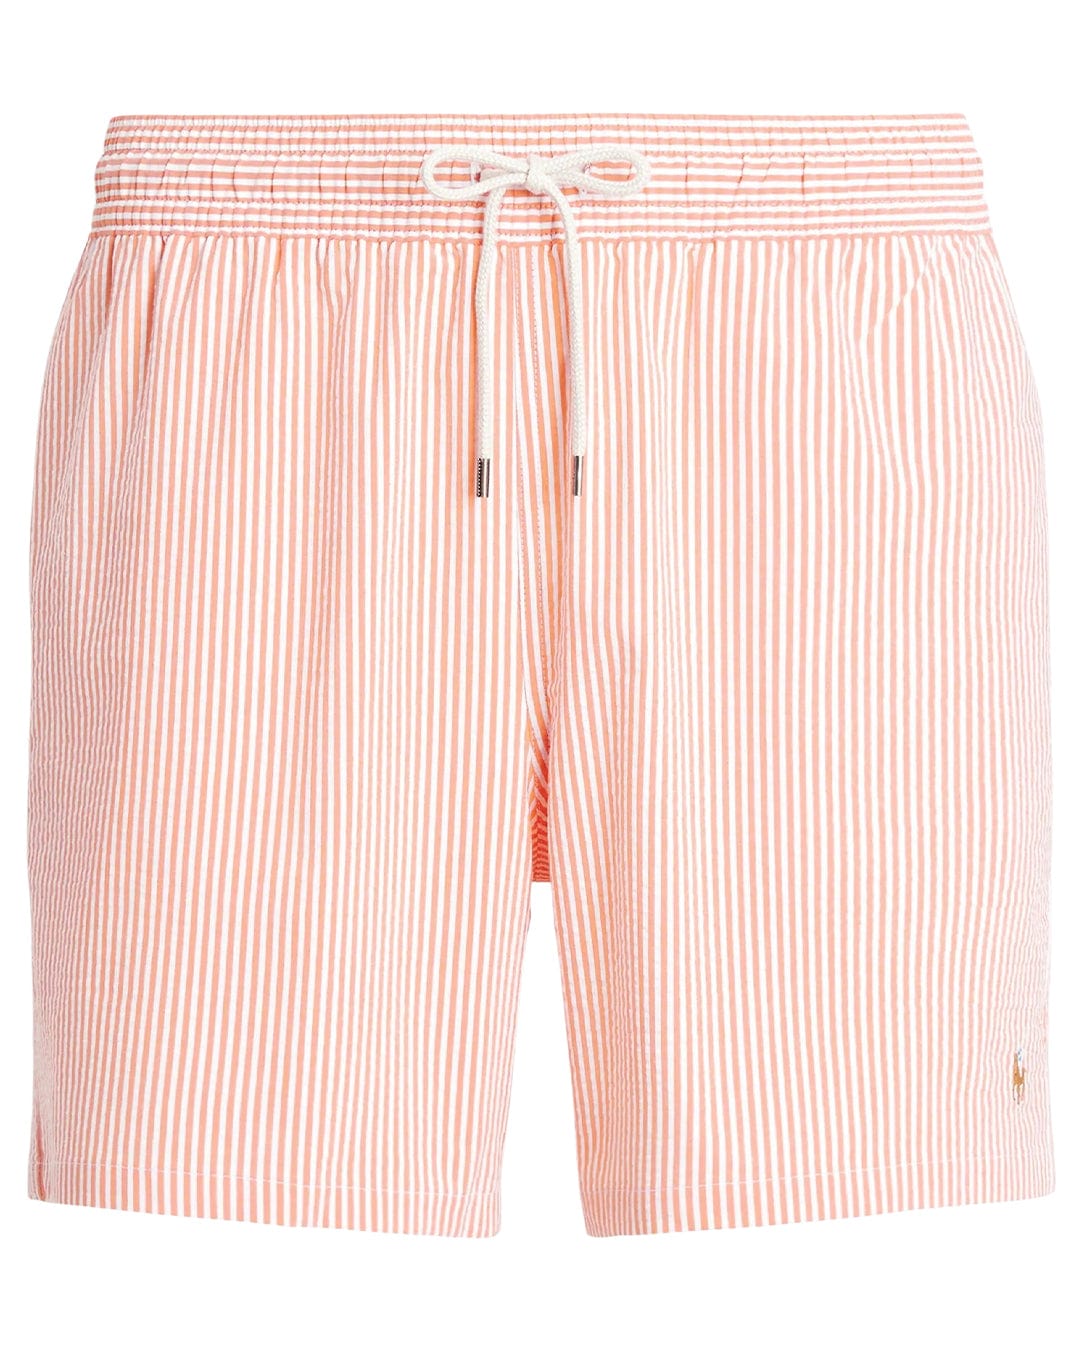 Polo Ralph Lauren Swimwear Polo Ralph Lauren Orange Striped Traveler Swim Shorts